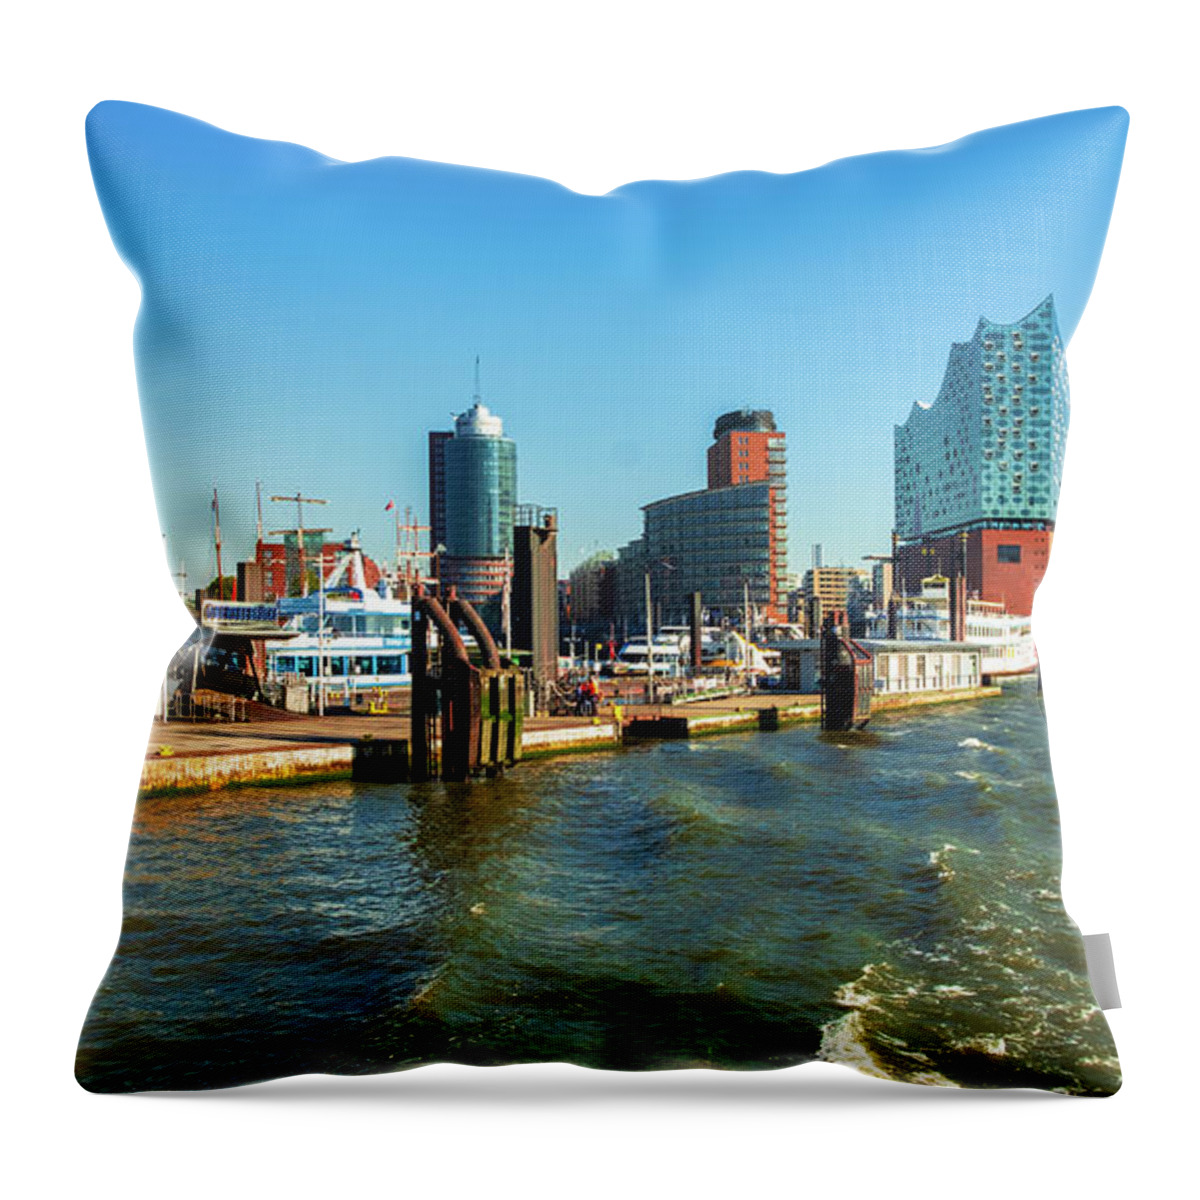 Dramatic Throw Pillow featuring the photograph Panoramic view of Hamburg. #1 by Marina Usmanskaya